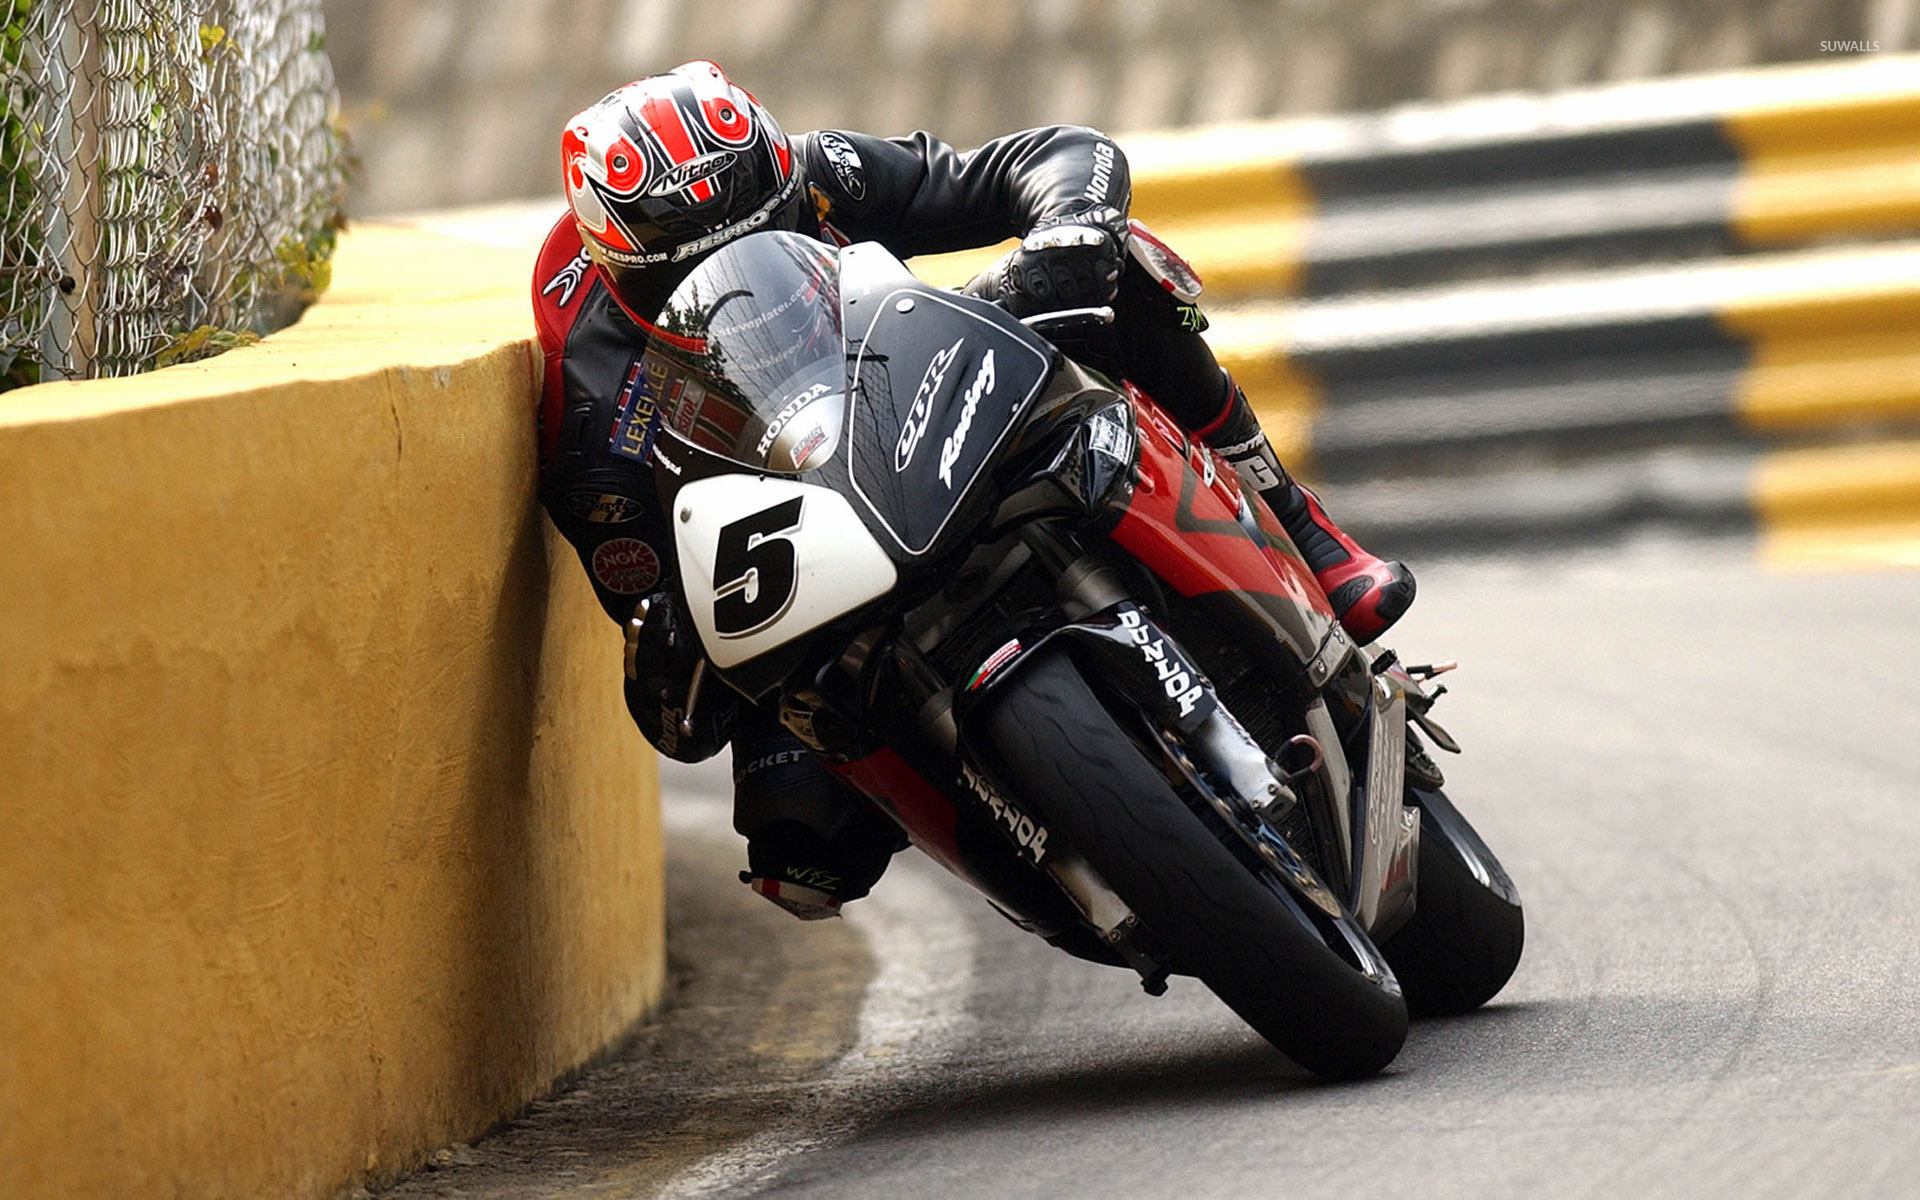 Macau Grand Prix Honda Cbr Wallpaper Motorcycle